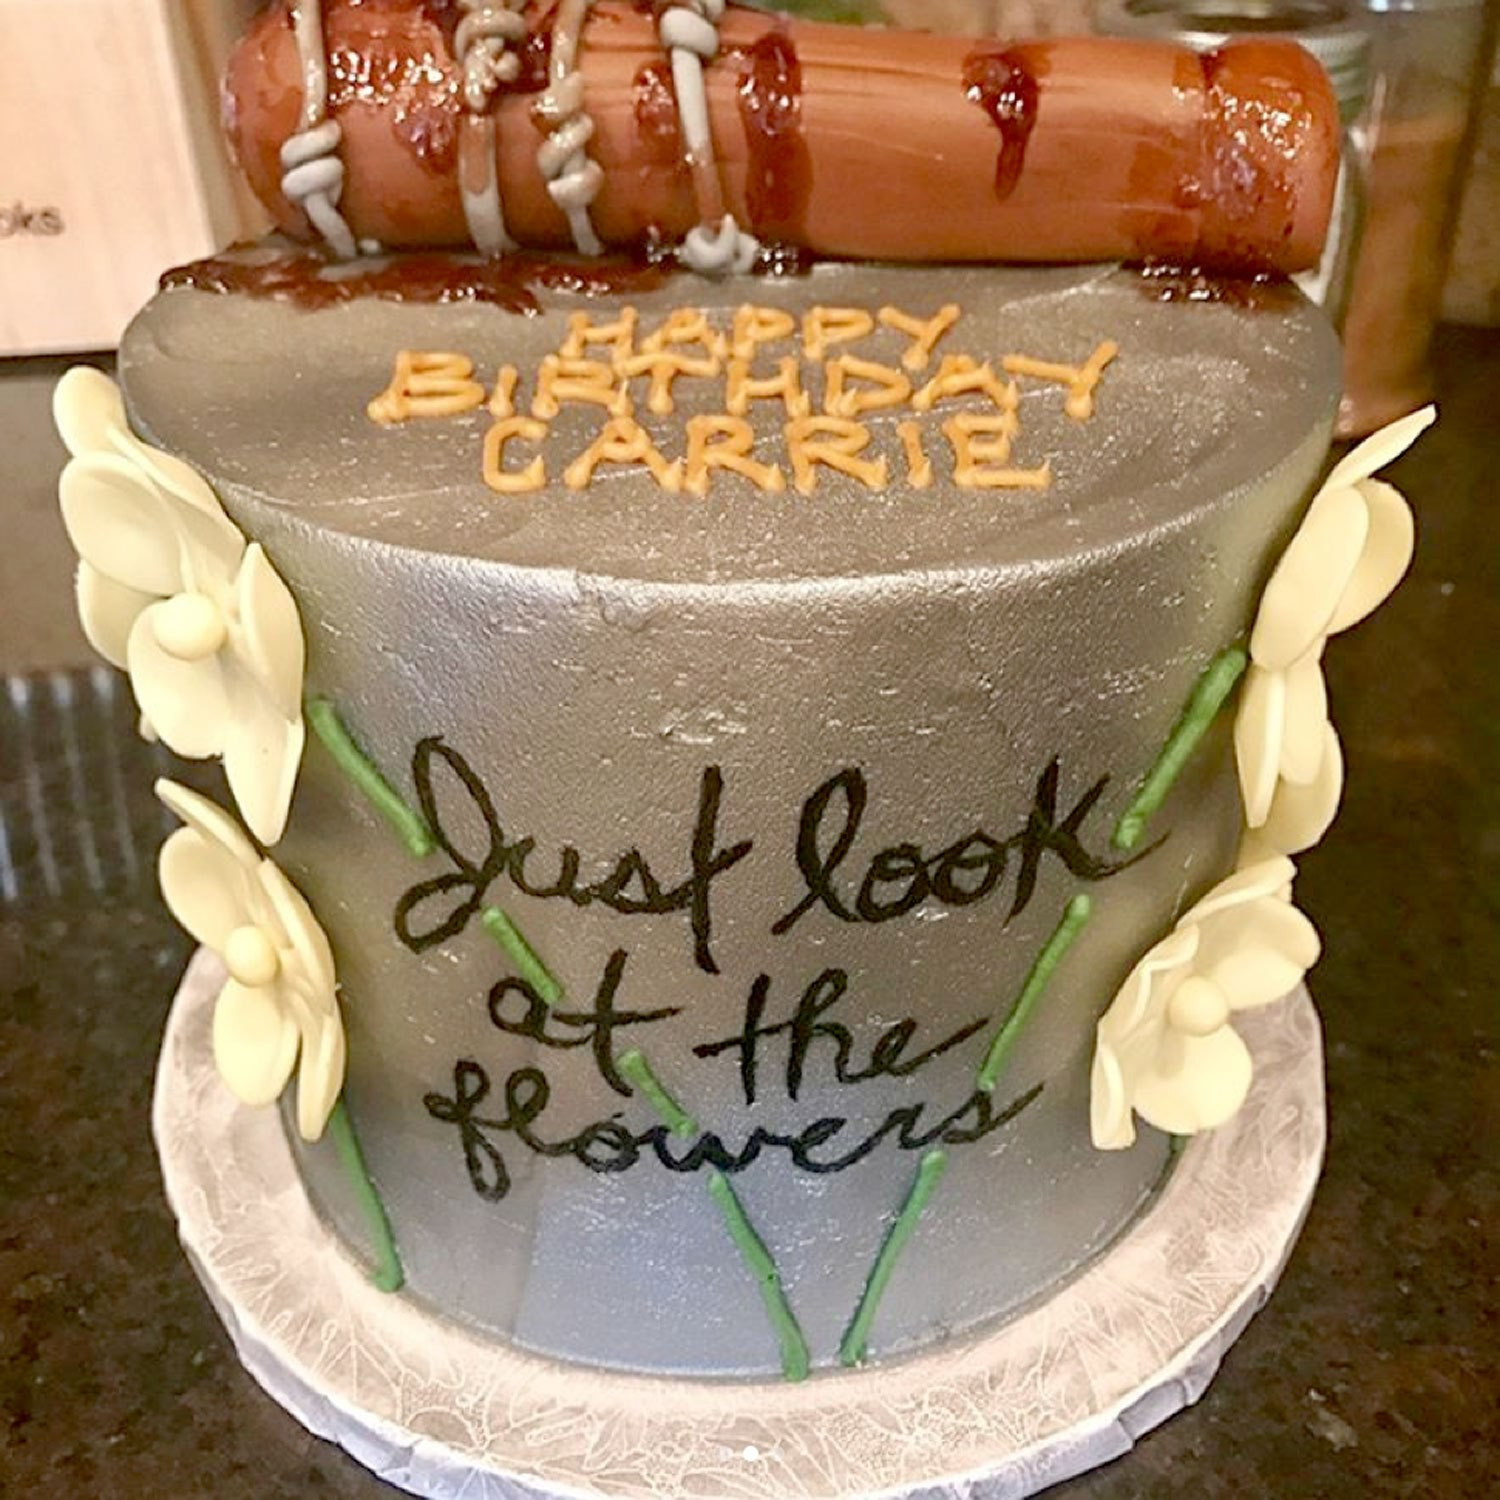 Walking Dead Birthday Cakes
 Carrie Underwood s Walking Dead Birthday Cake s